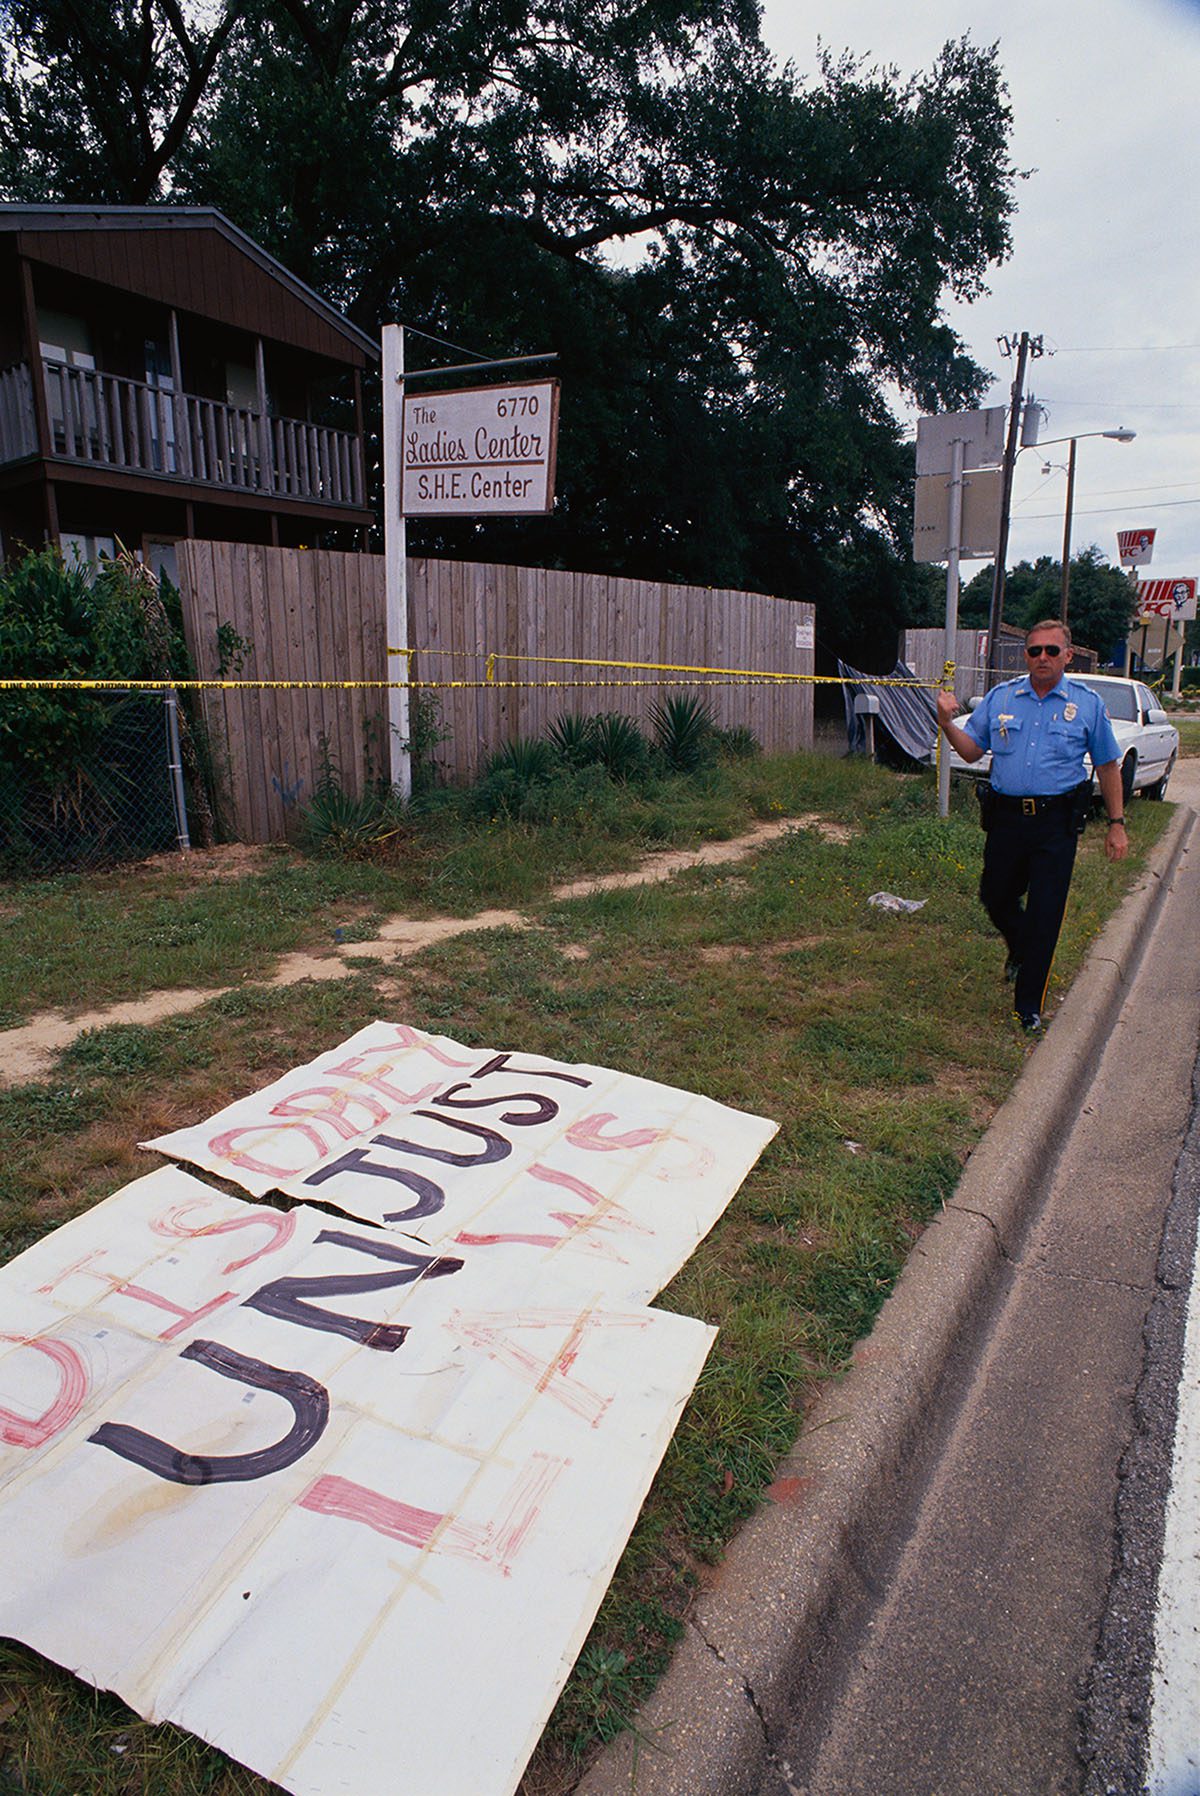 A policeman barricades the crime scene near The Ladies Center.